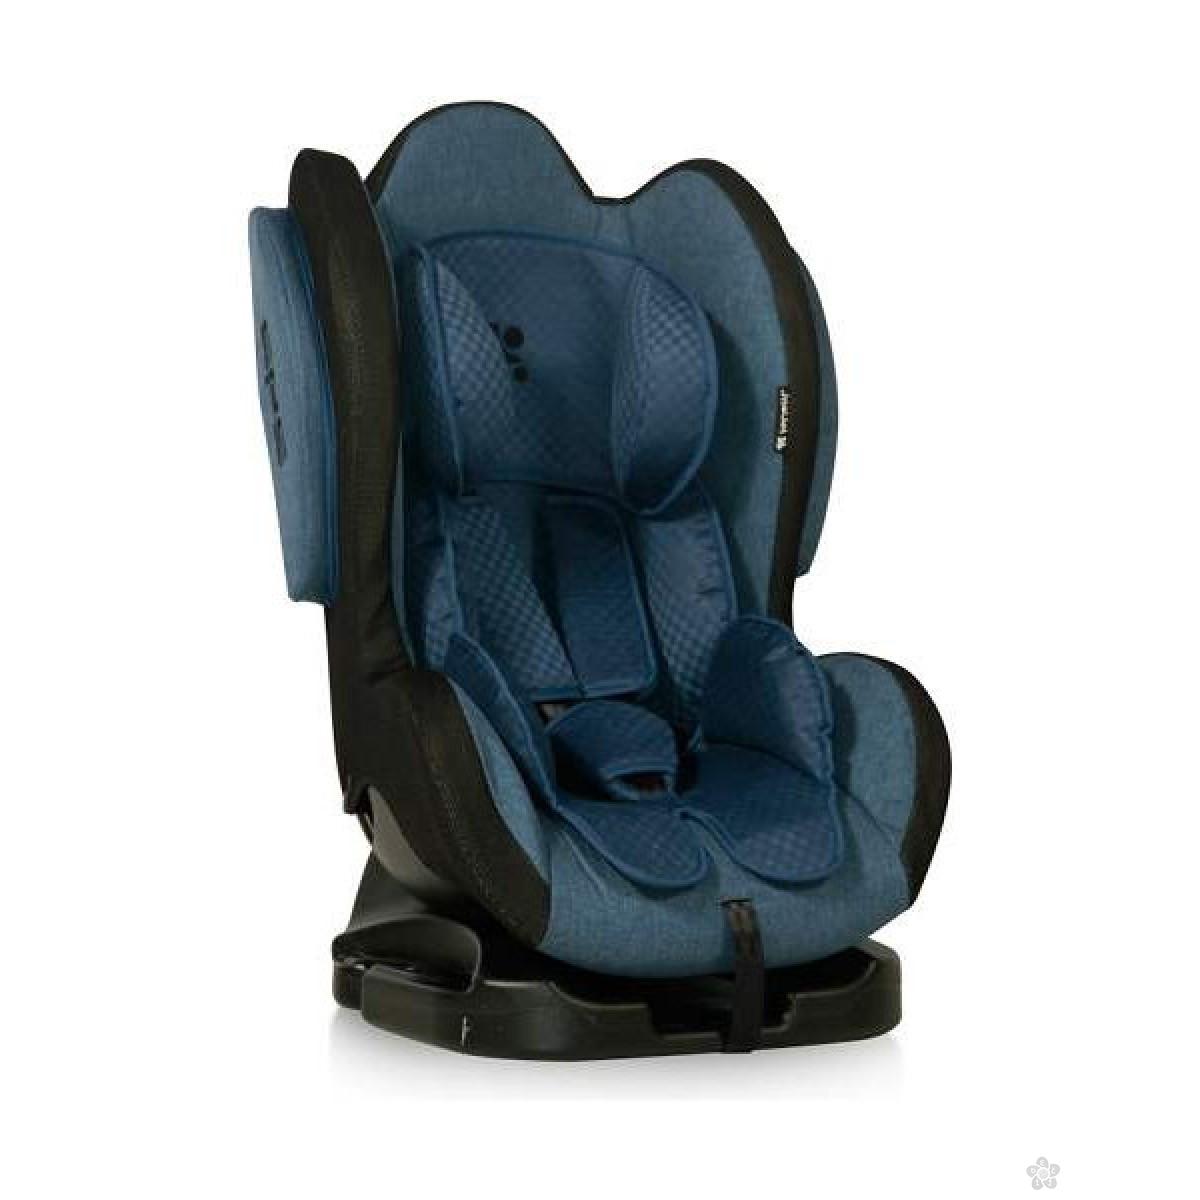 Auto Sedište Sigma Blue 0-25kg 10071031842 